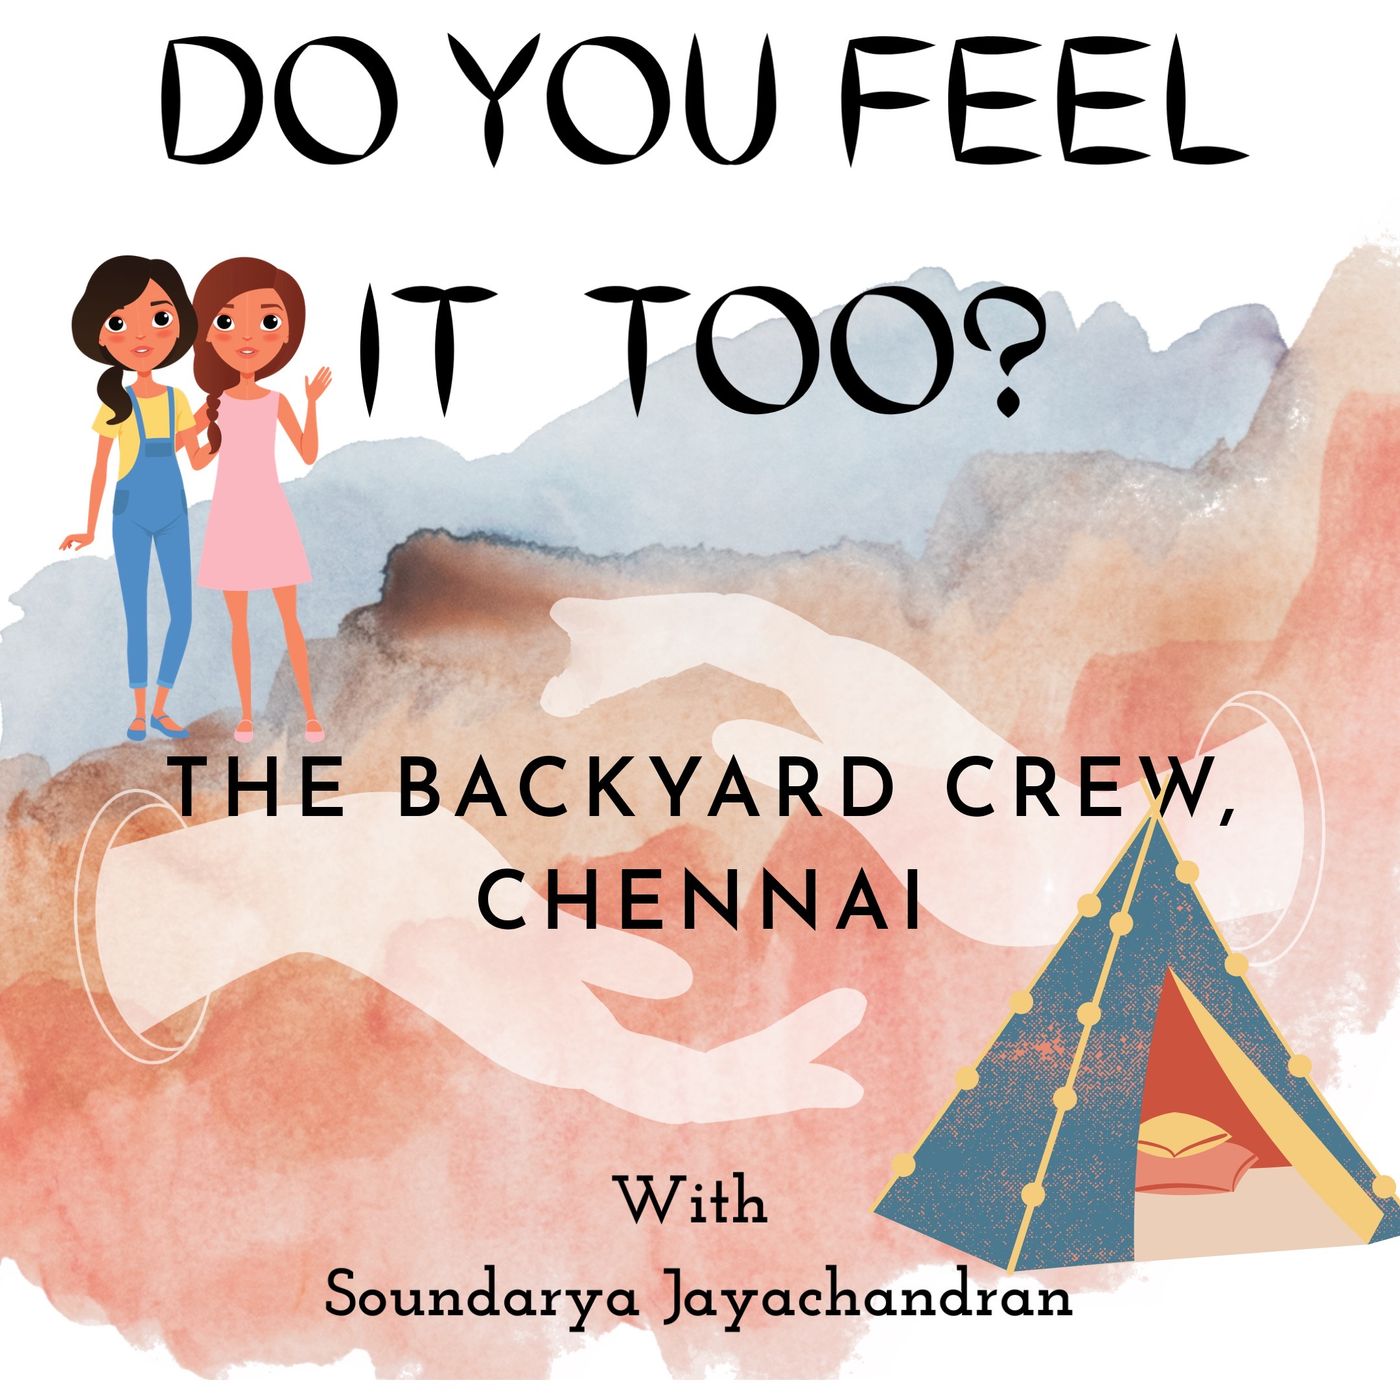 The Backyard Crew, Chennai